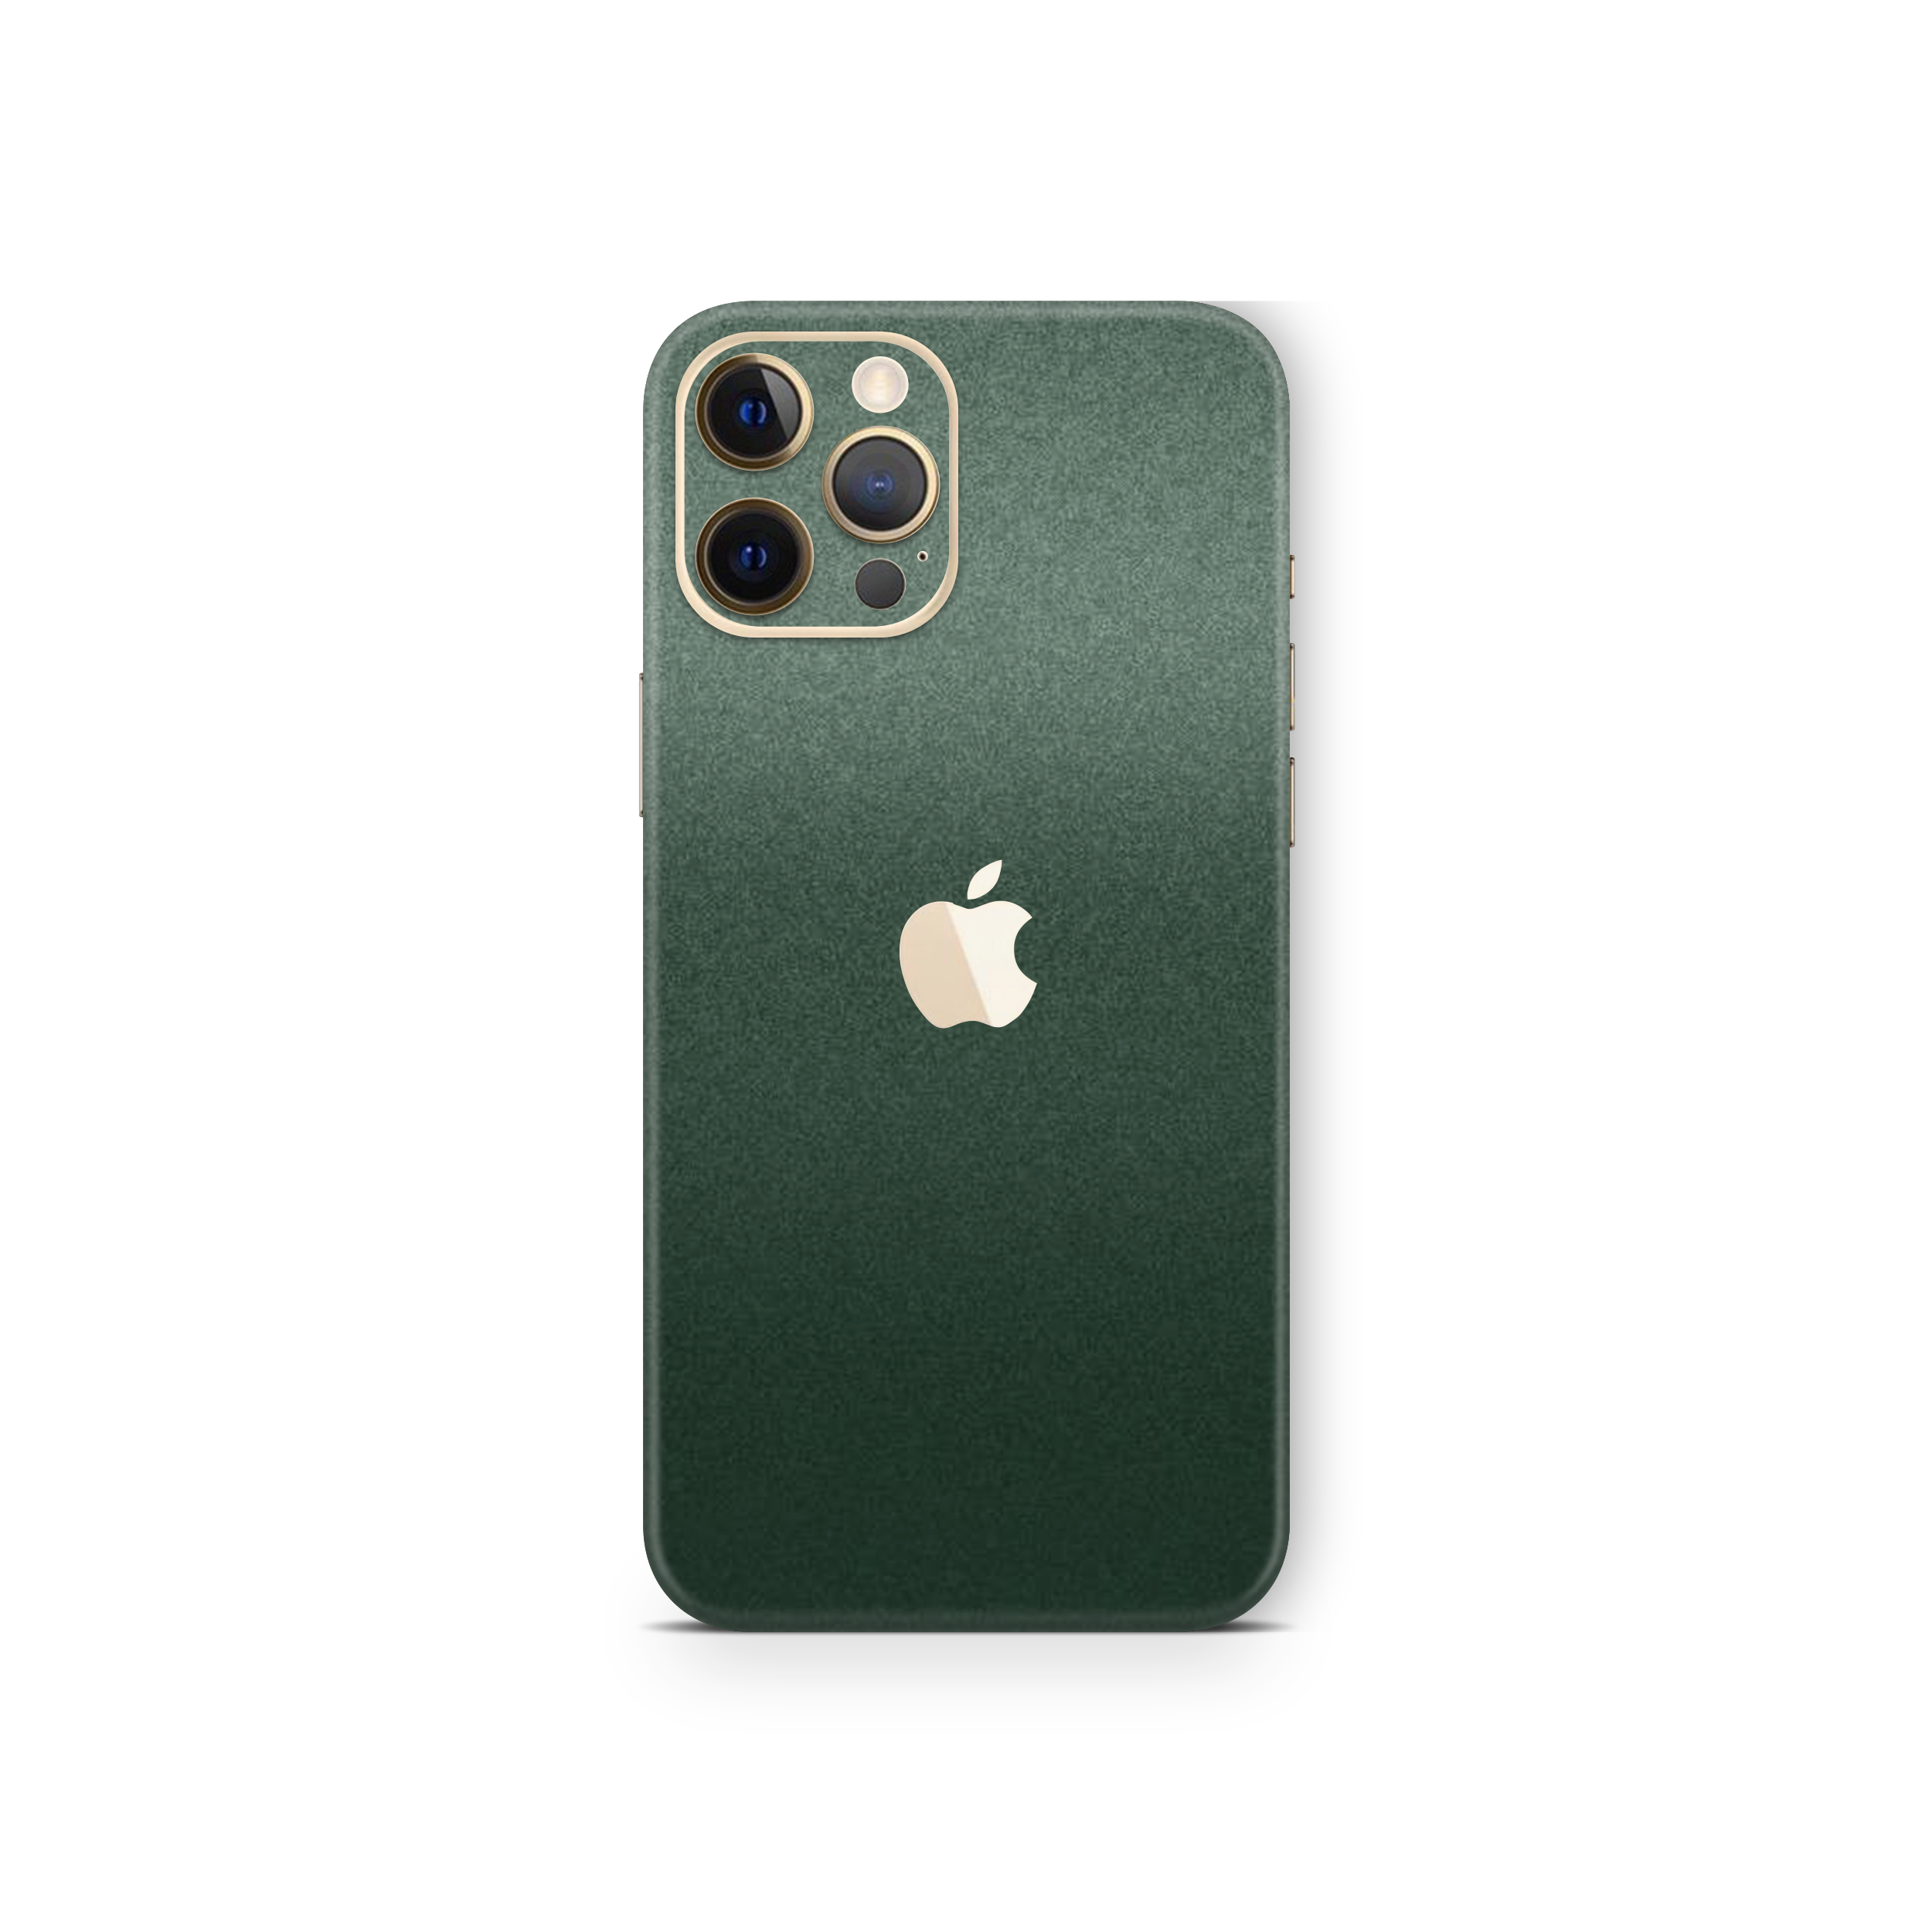 Pine Green Metallic Skin For iPhone 12 Pro